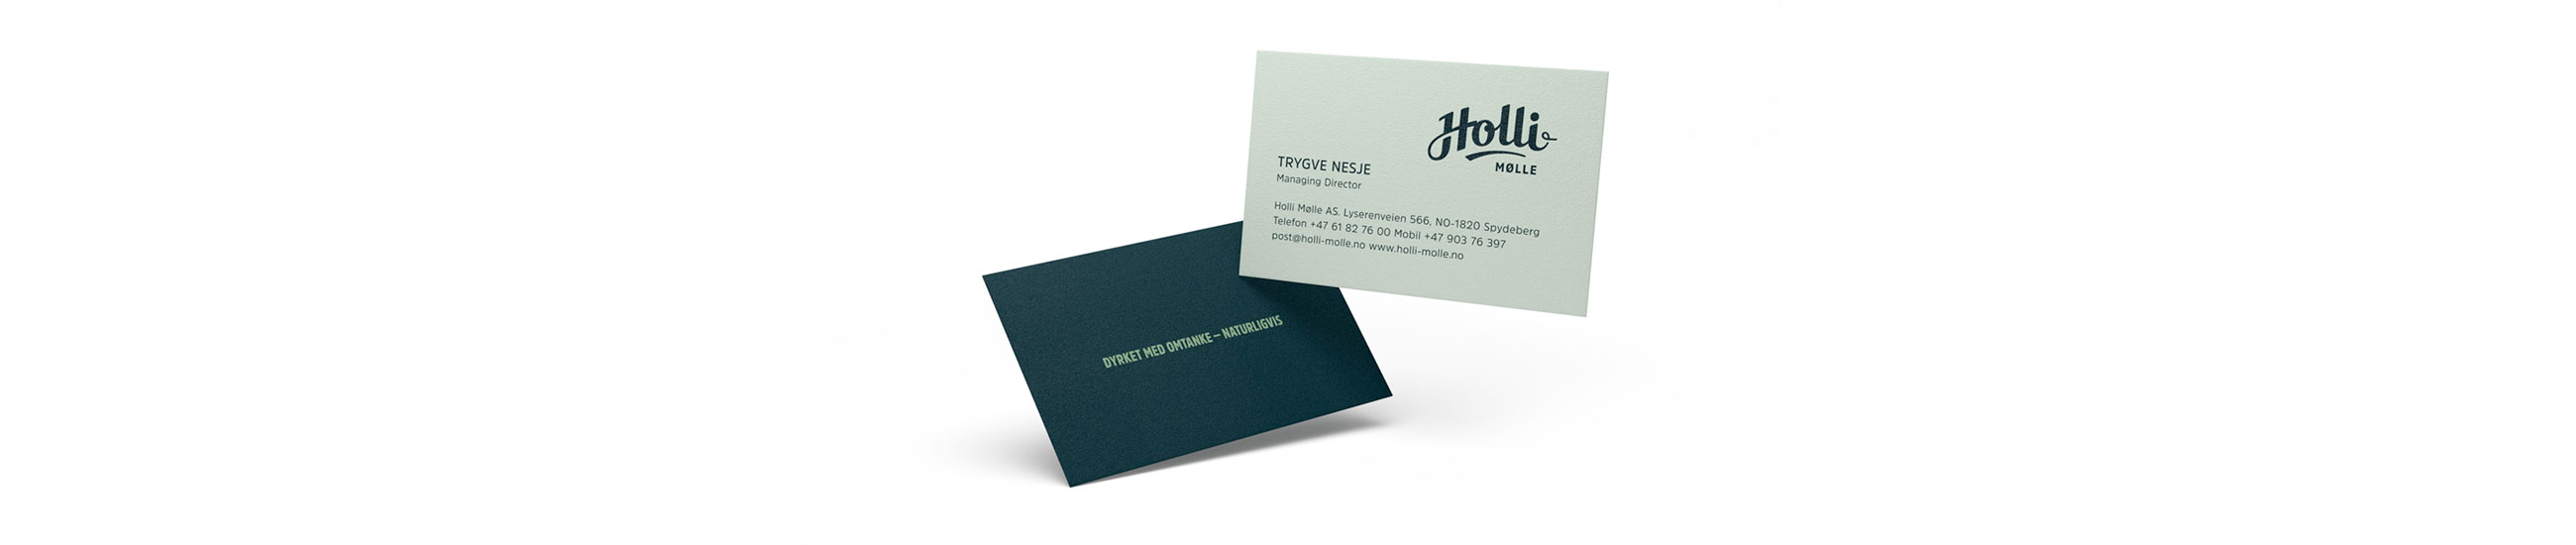 Holli Mølle visittkort business card. Visuell identitet visual identity.